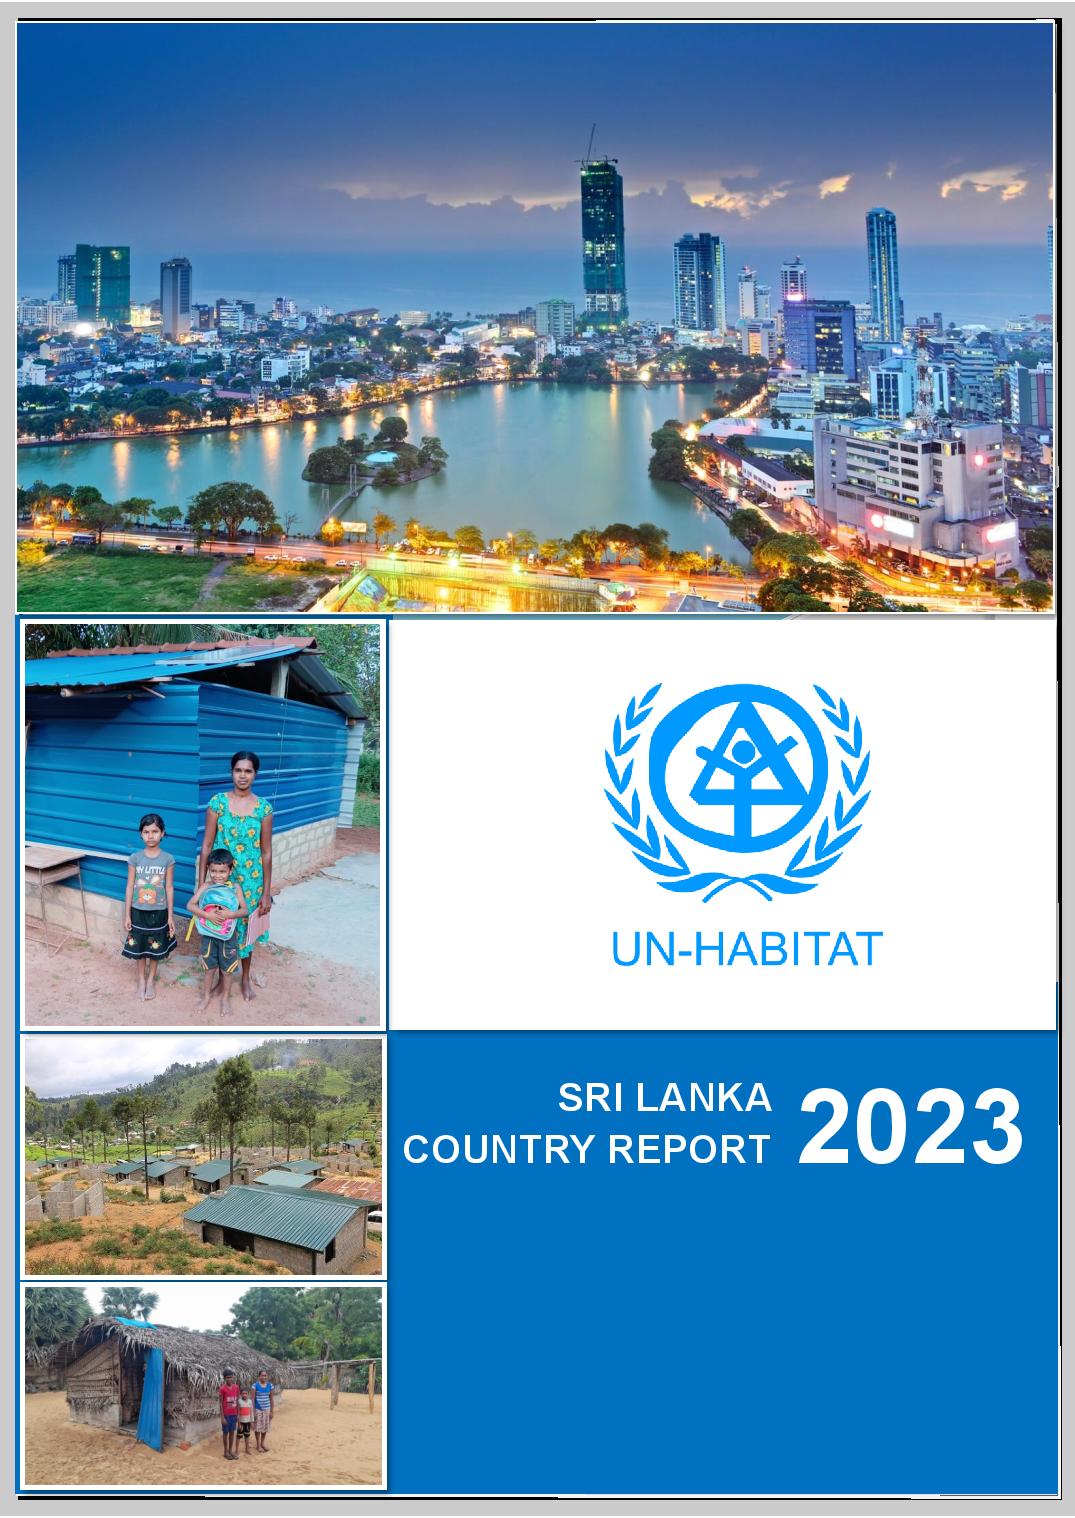 UN-Habitat Sri Lanka Country Report 2023